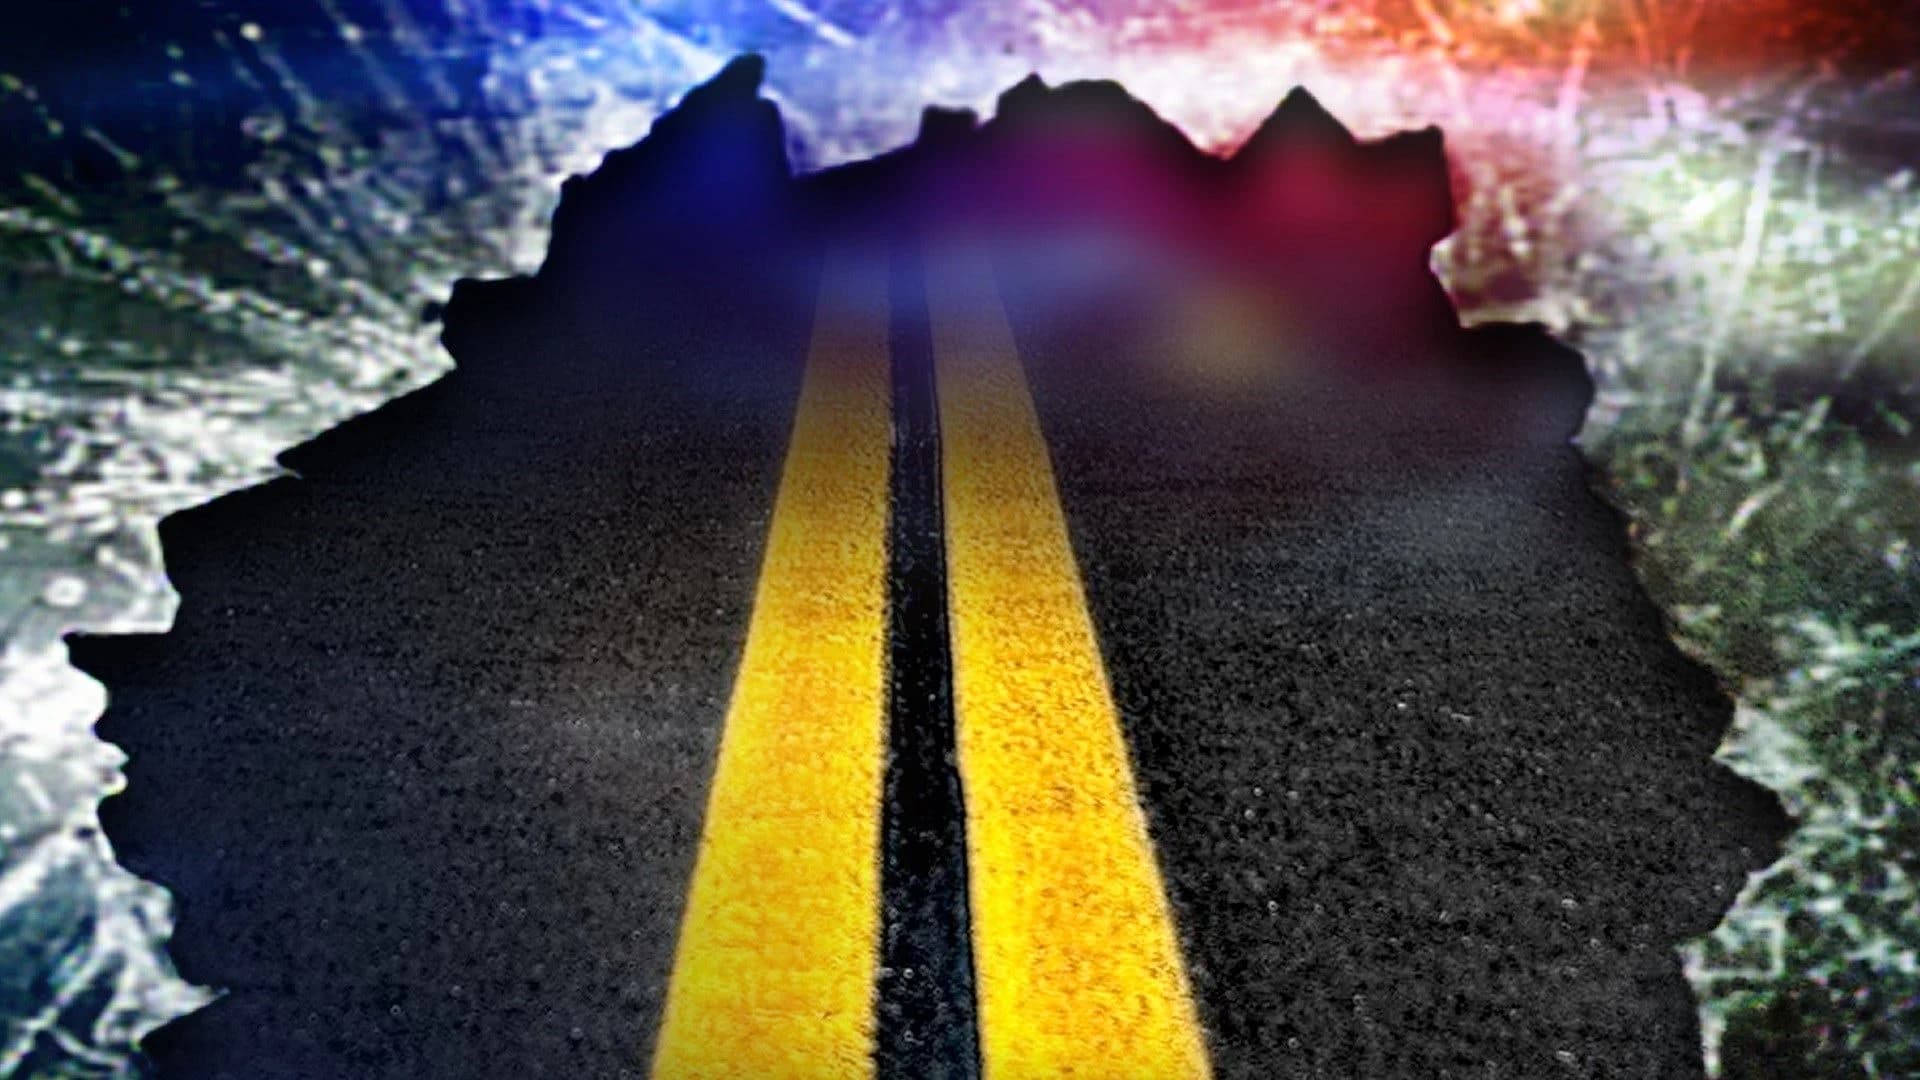 Authorities identify 2 women killed in Bergen County crash